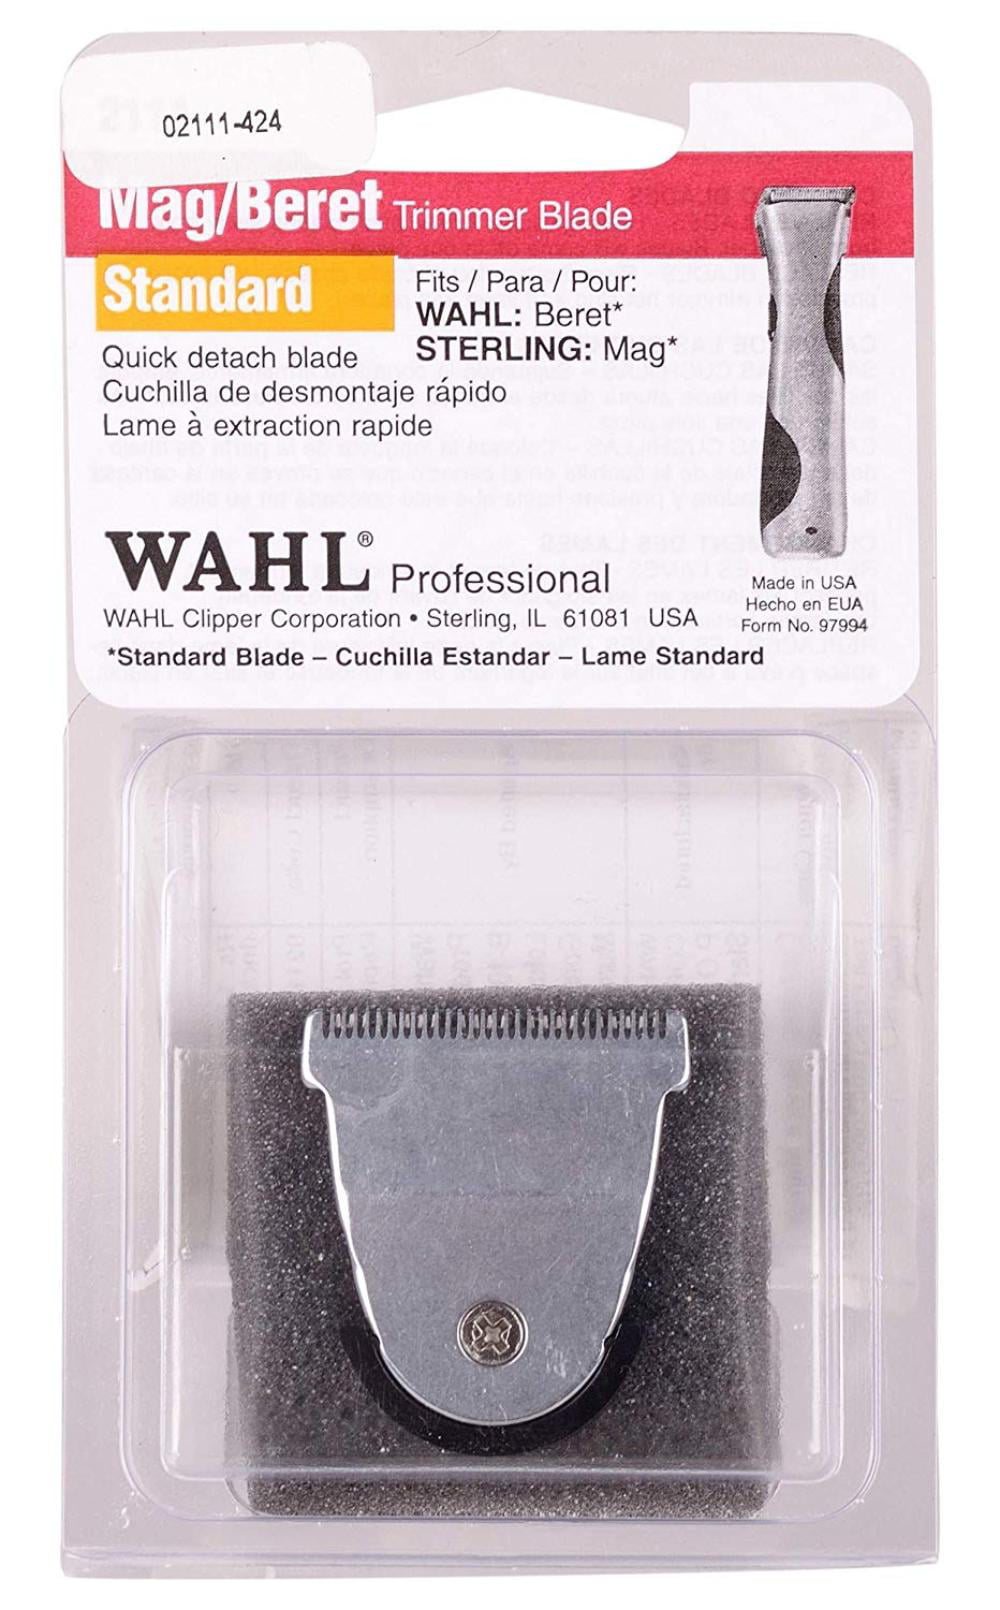 wahl replacement blades walmart